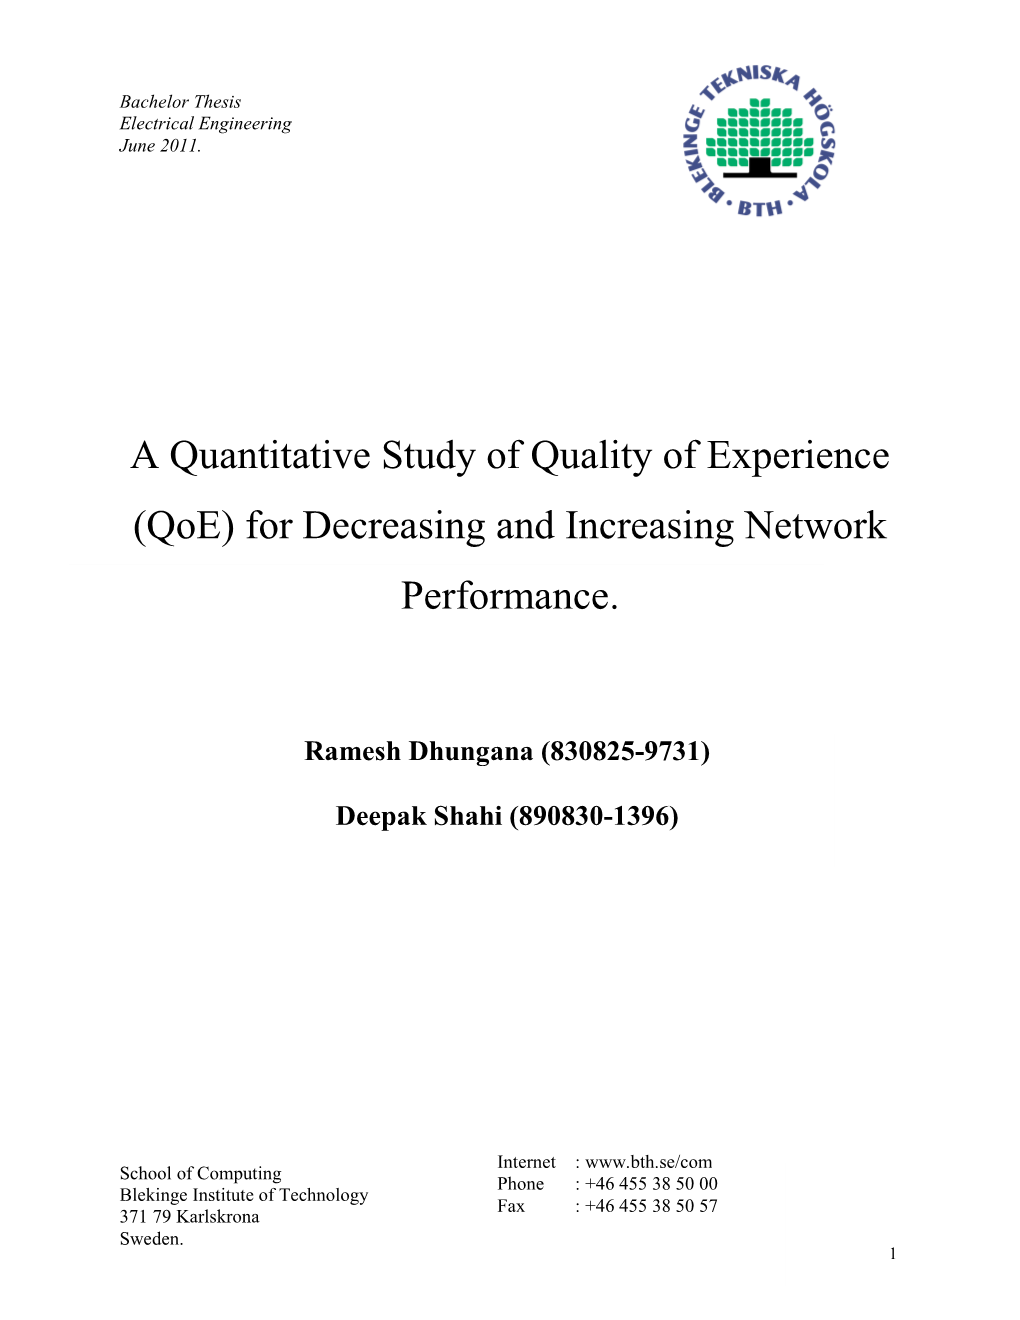 Qoe) for Decreasing and Increasing Network Performance